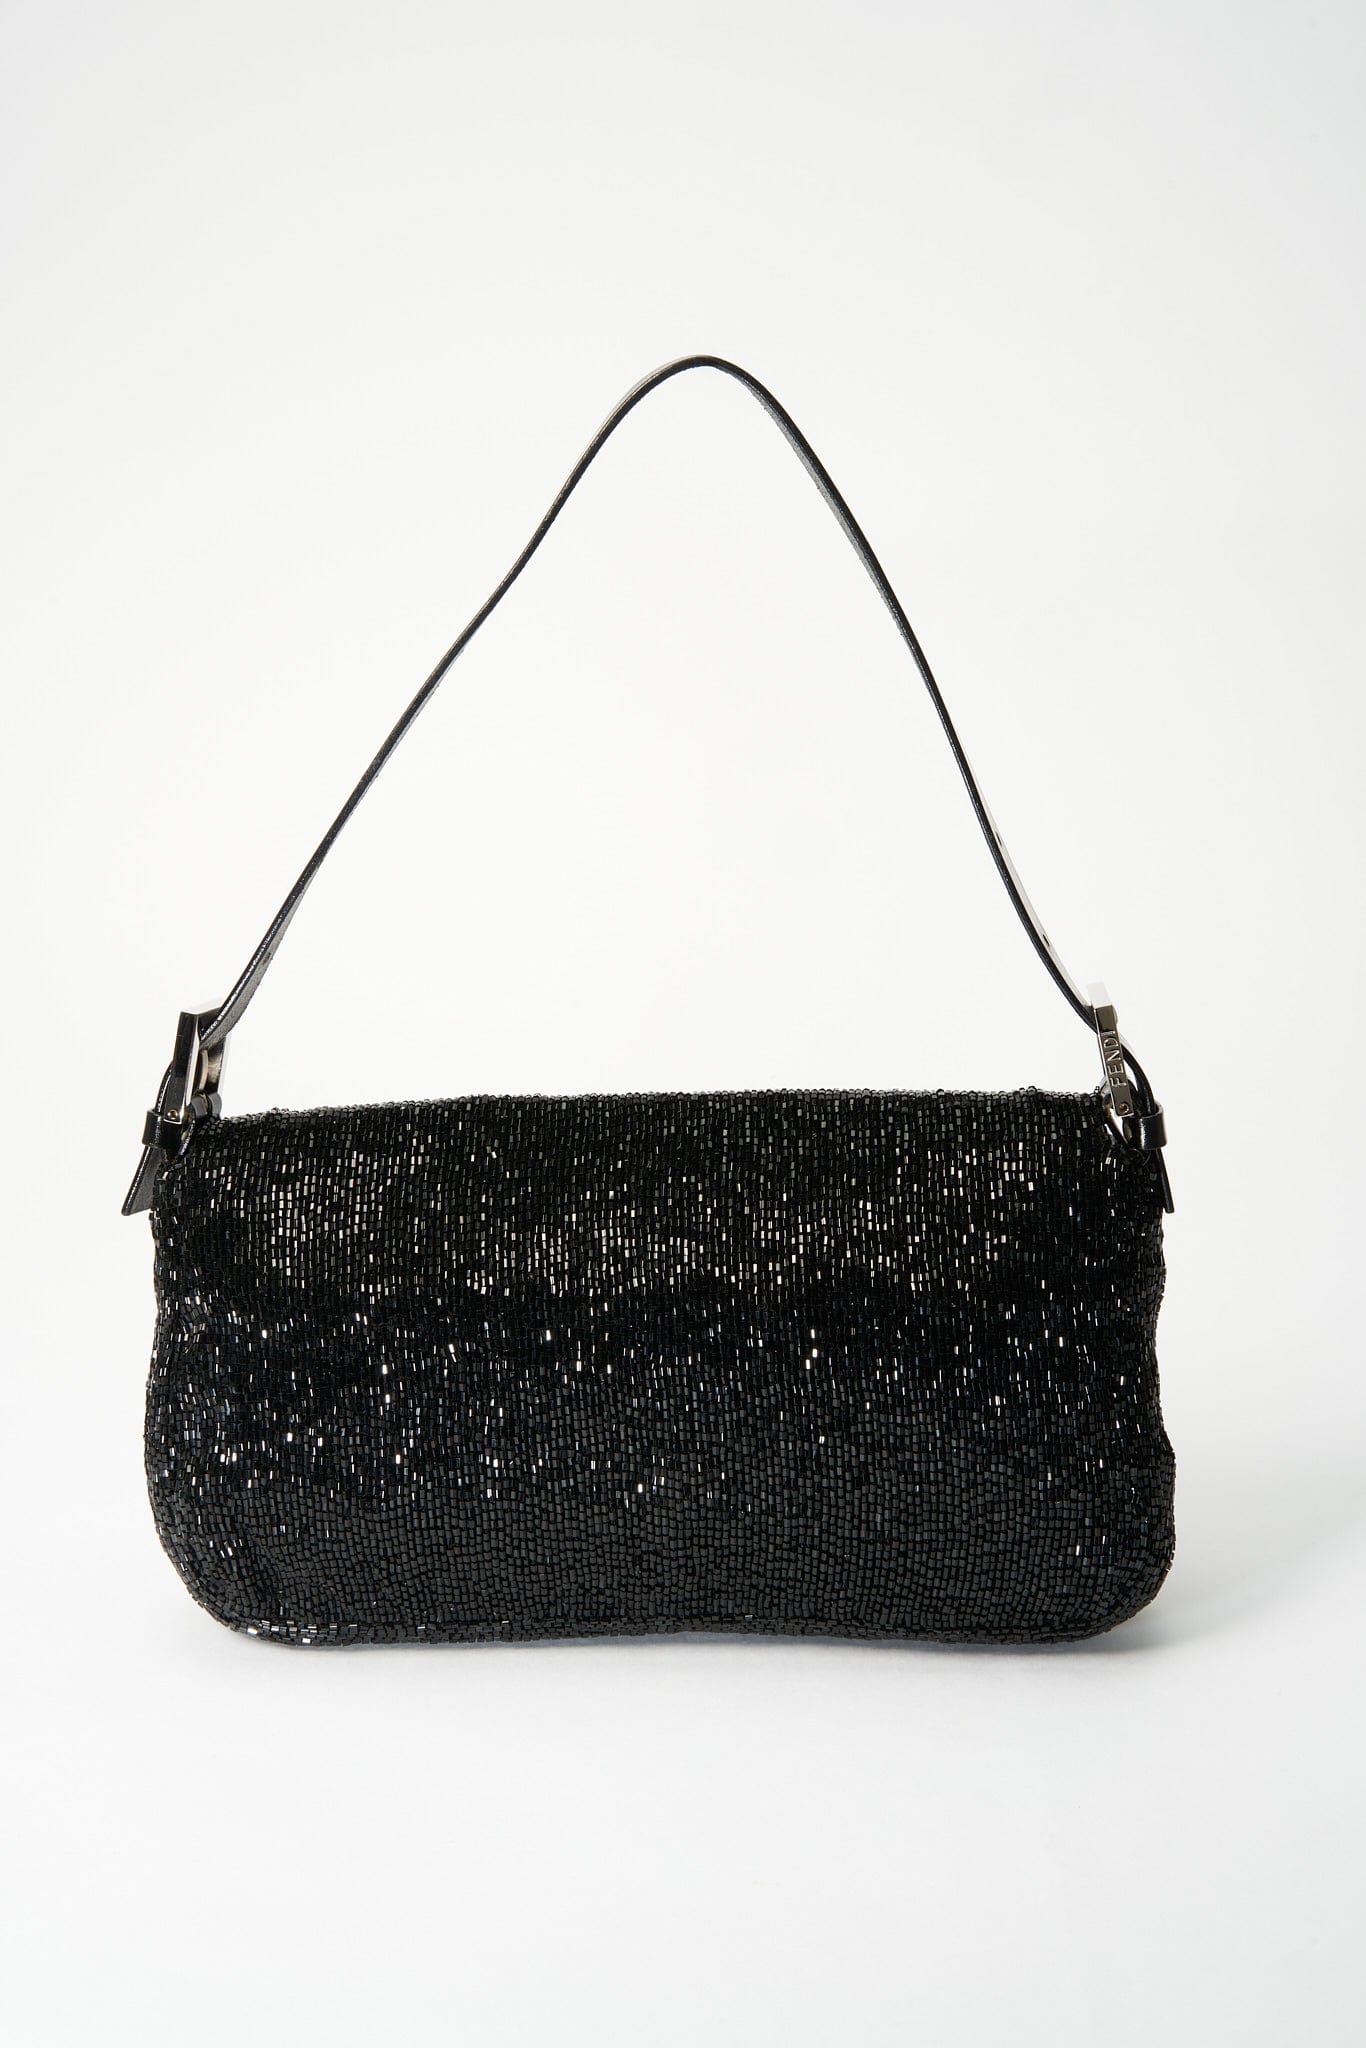 Fendi Black Sequin Beaded Baguette Bag 1750